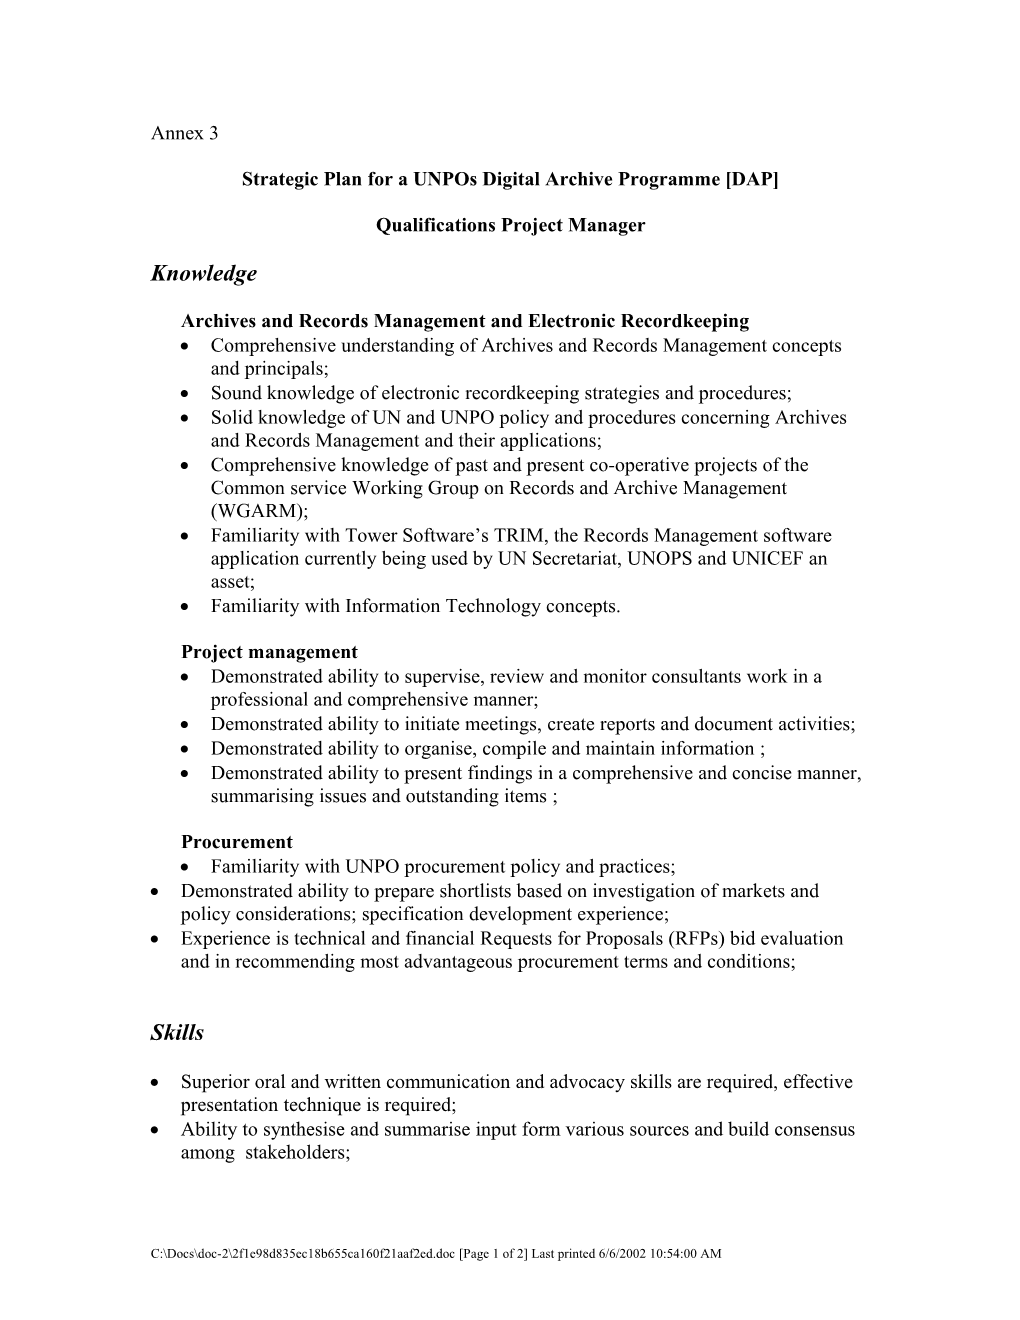 Strategic Plan for a Unpos Digital Archive Programme DAP